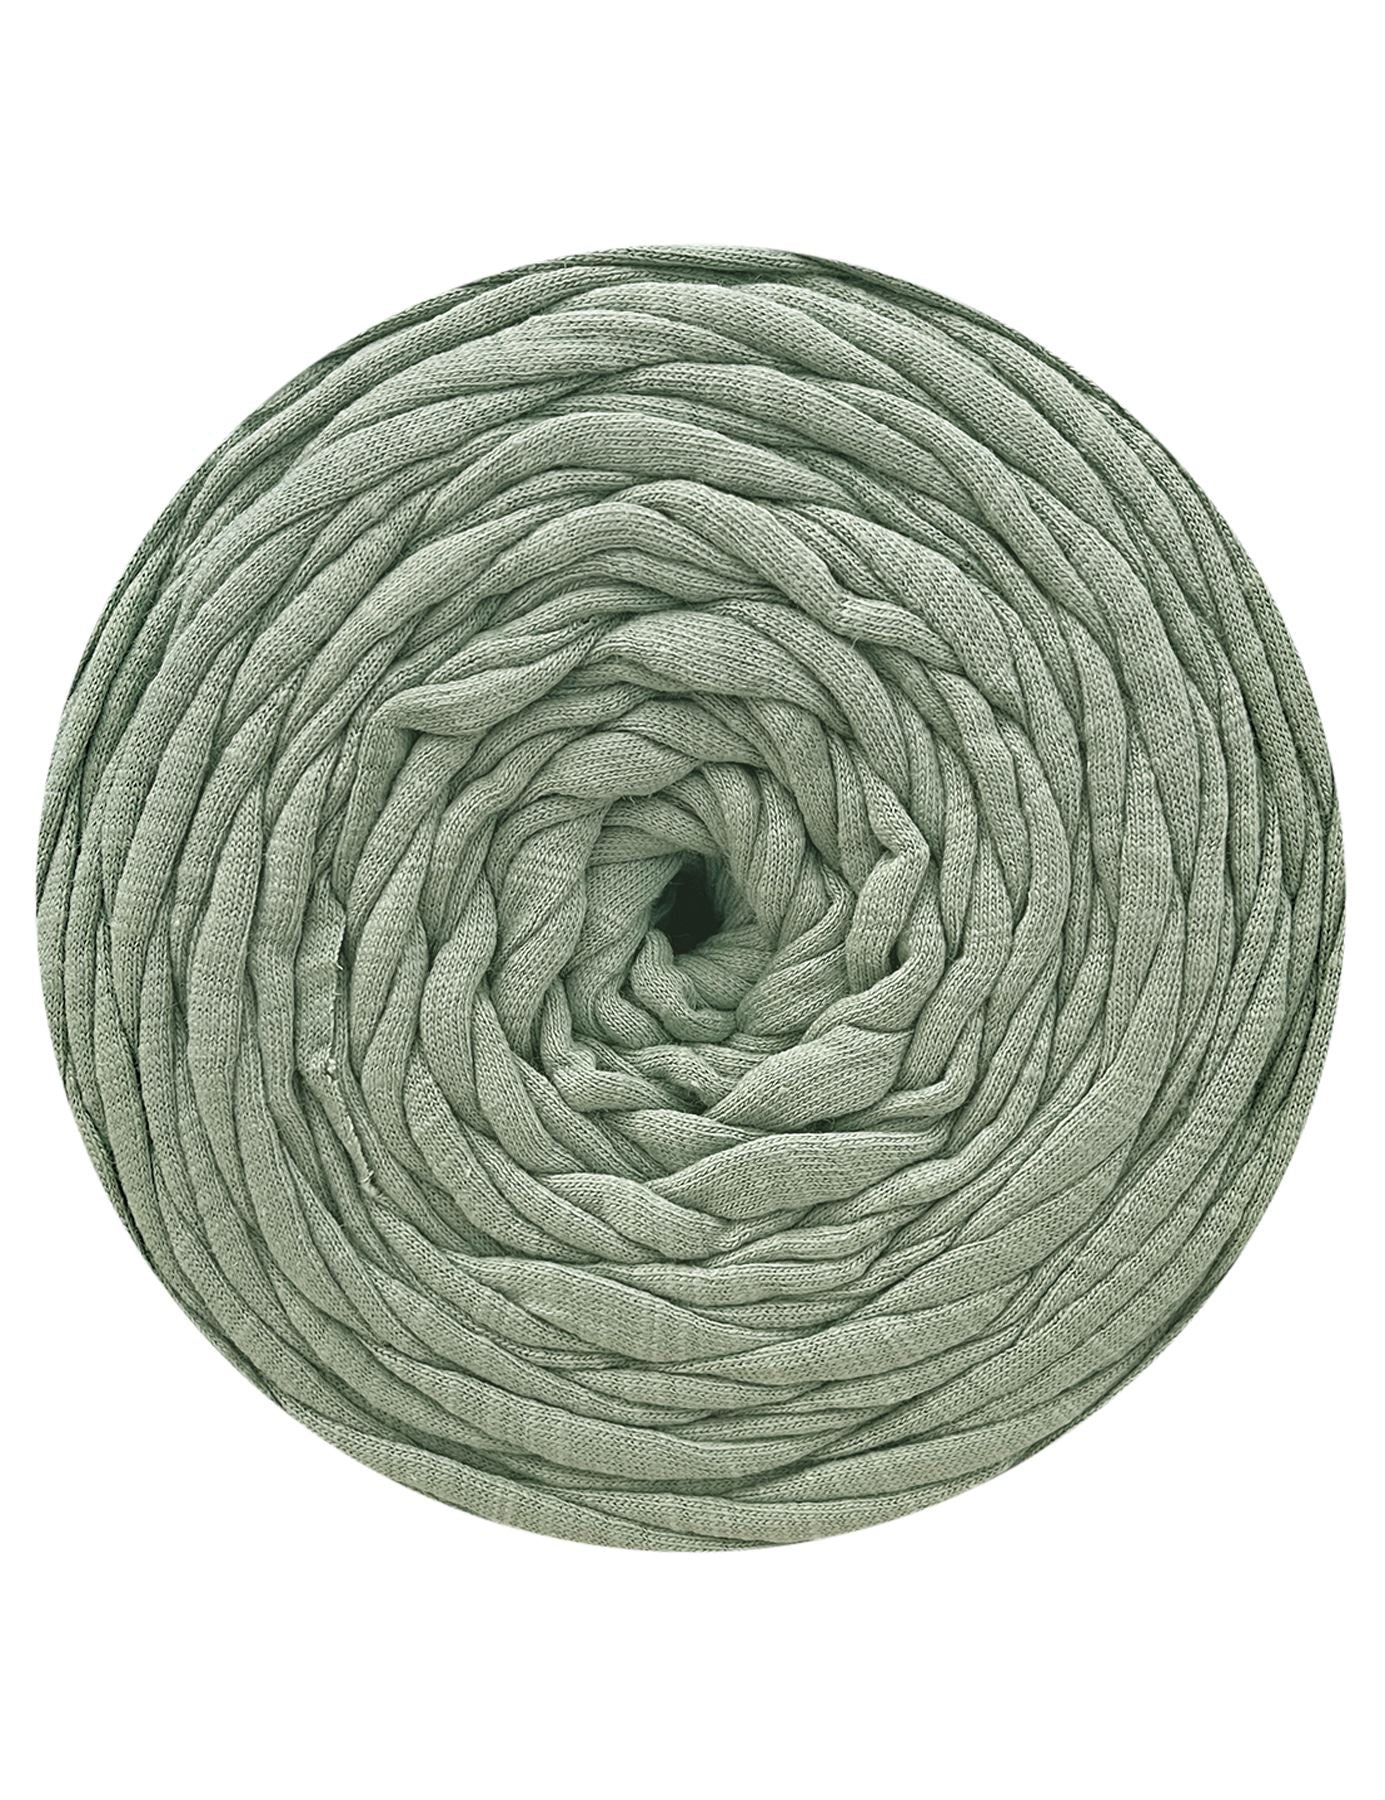 Pale sage green t-shirt yarn (100-120m)